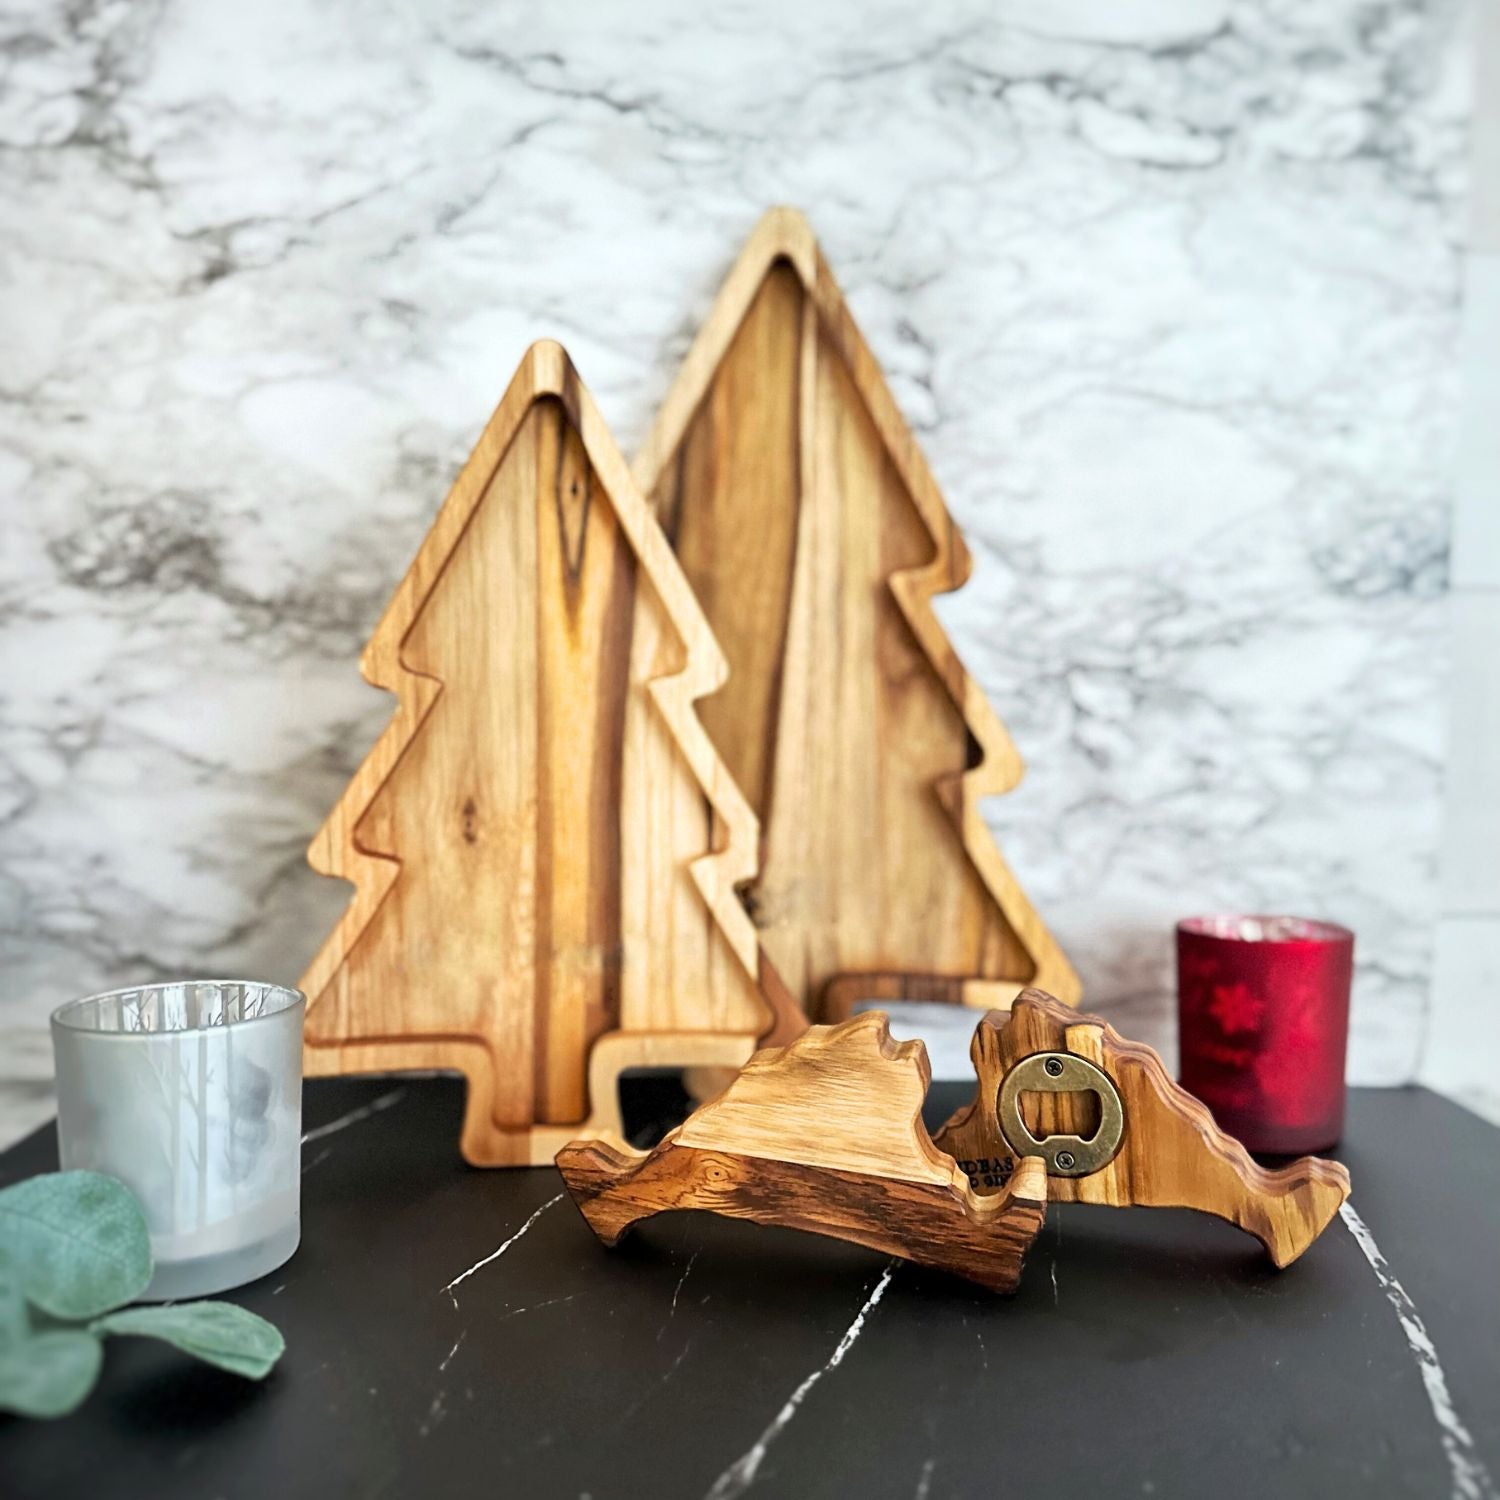 Christmas tree shaped charcuterie board, Christmas tree shaped cutting board